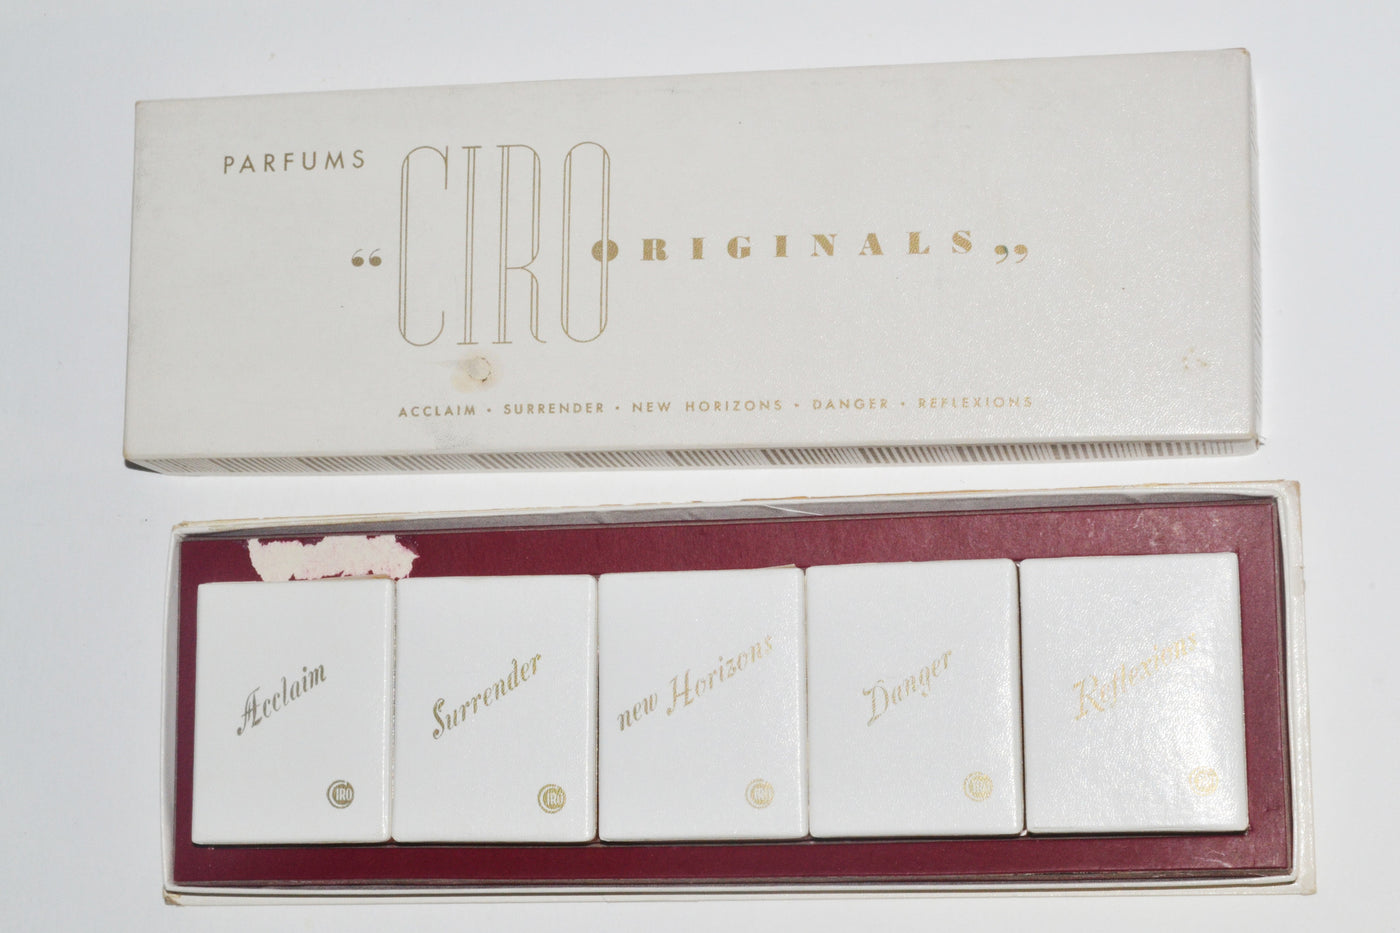 Ciro Originals Parfum Set